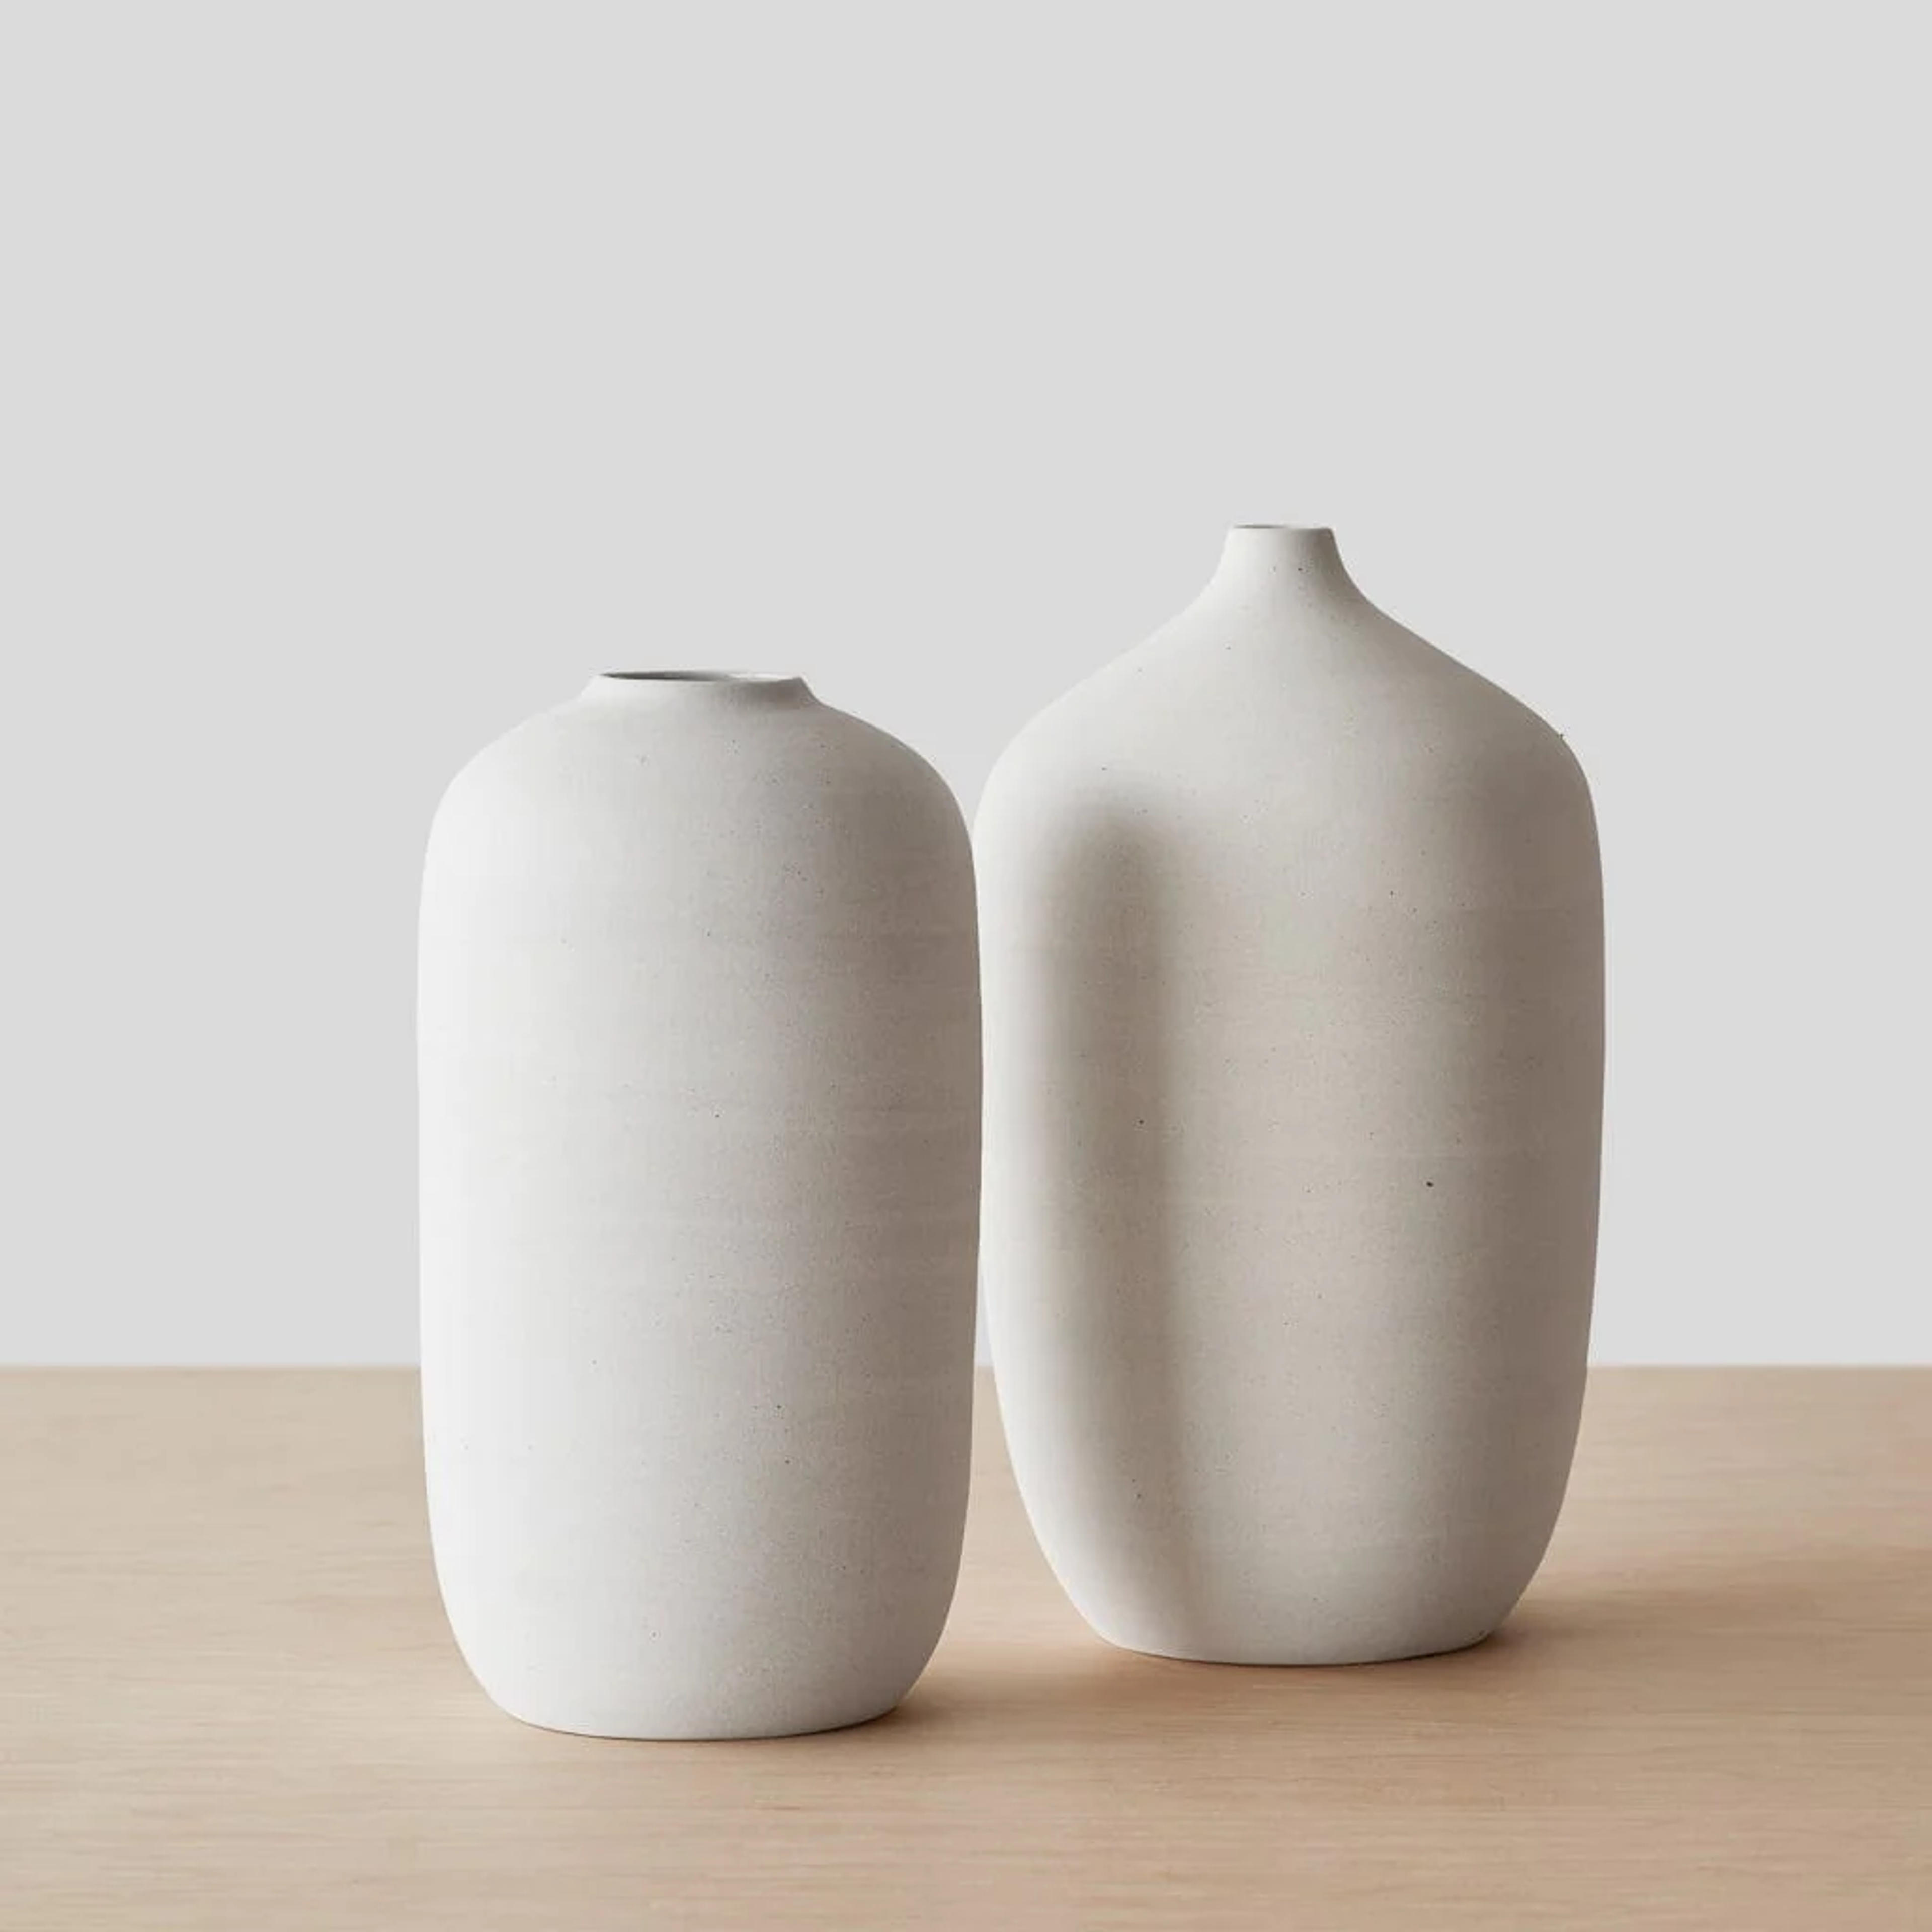 Loma Table Vases | Minimal Ceramic Vases at The Citizenry